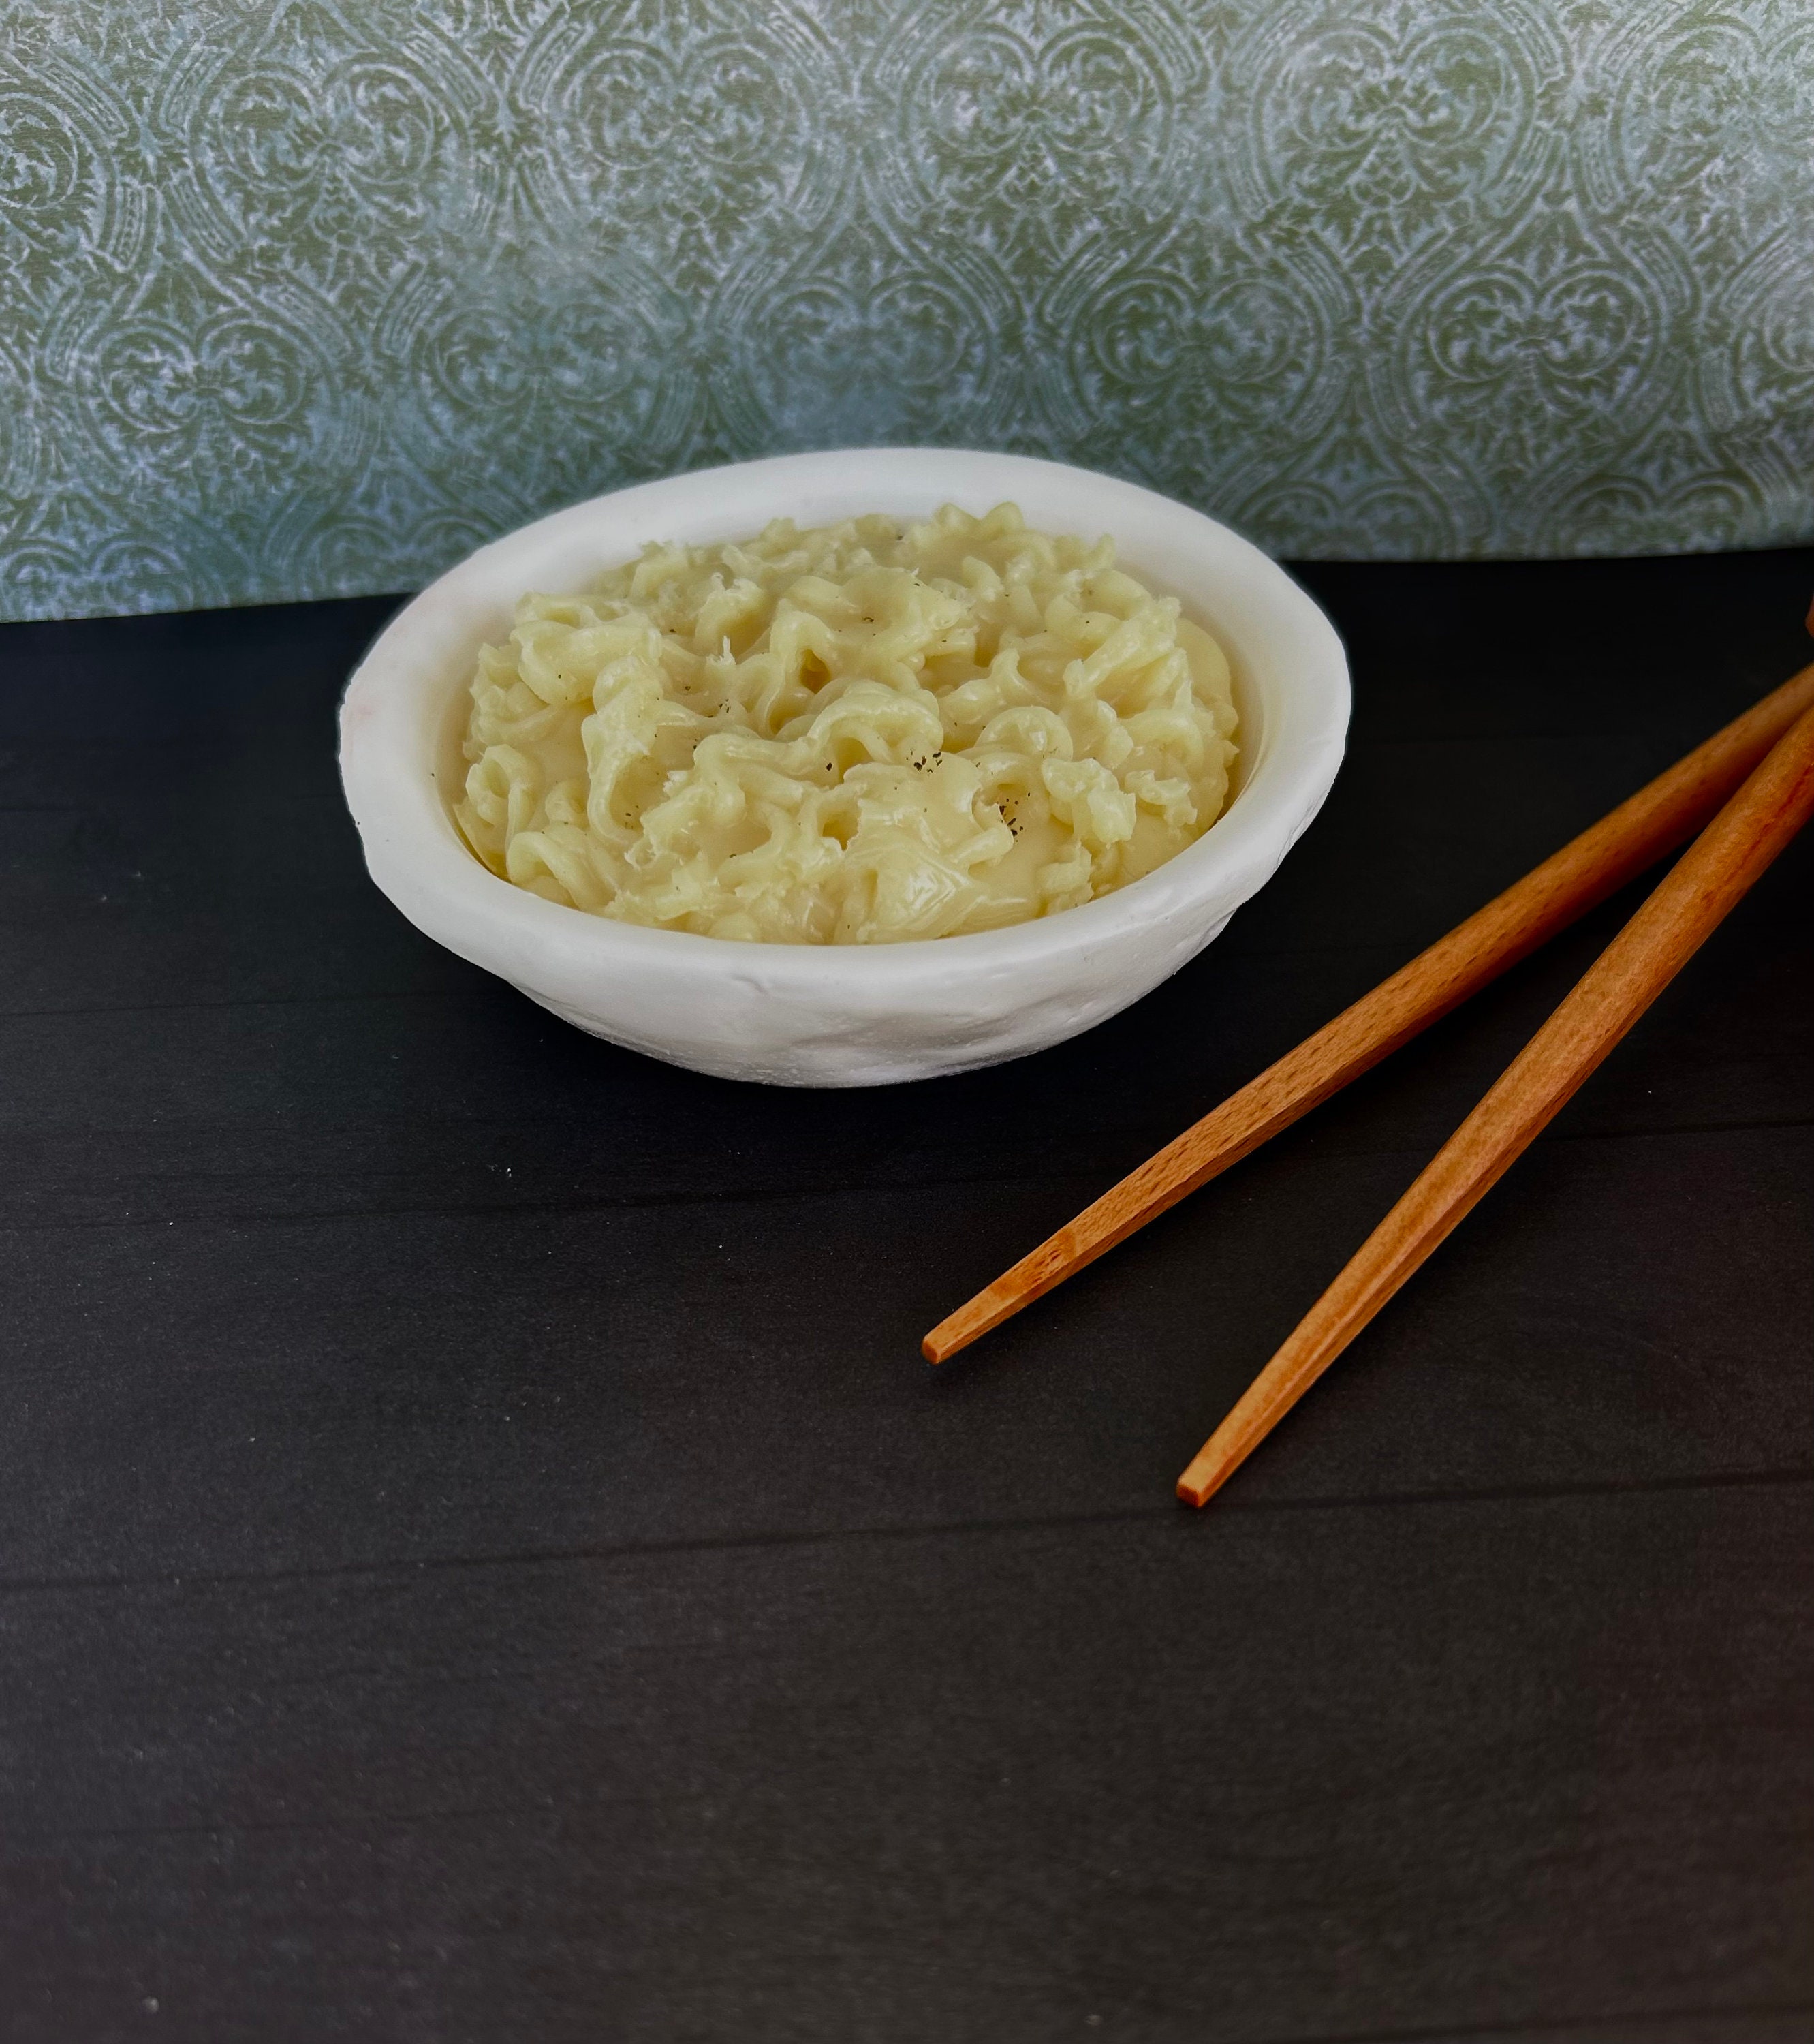 InfiniteeShop MAMA Top Ramen Instant Noodles, Free Snacks Included